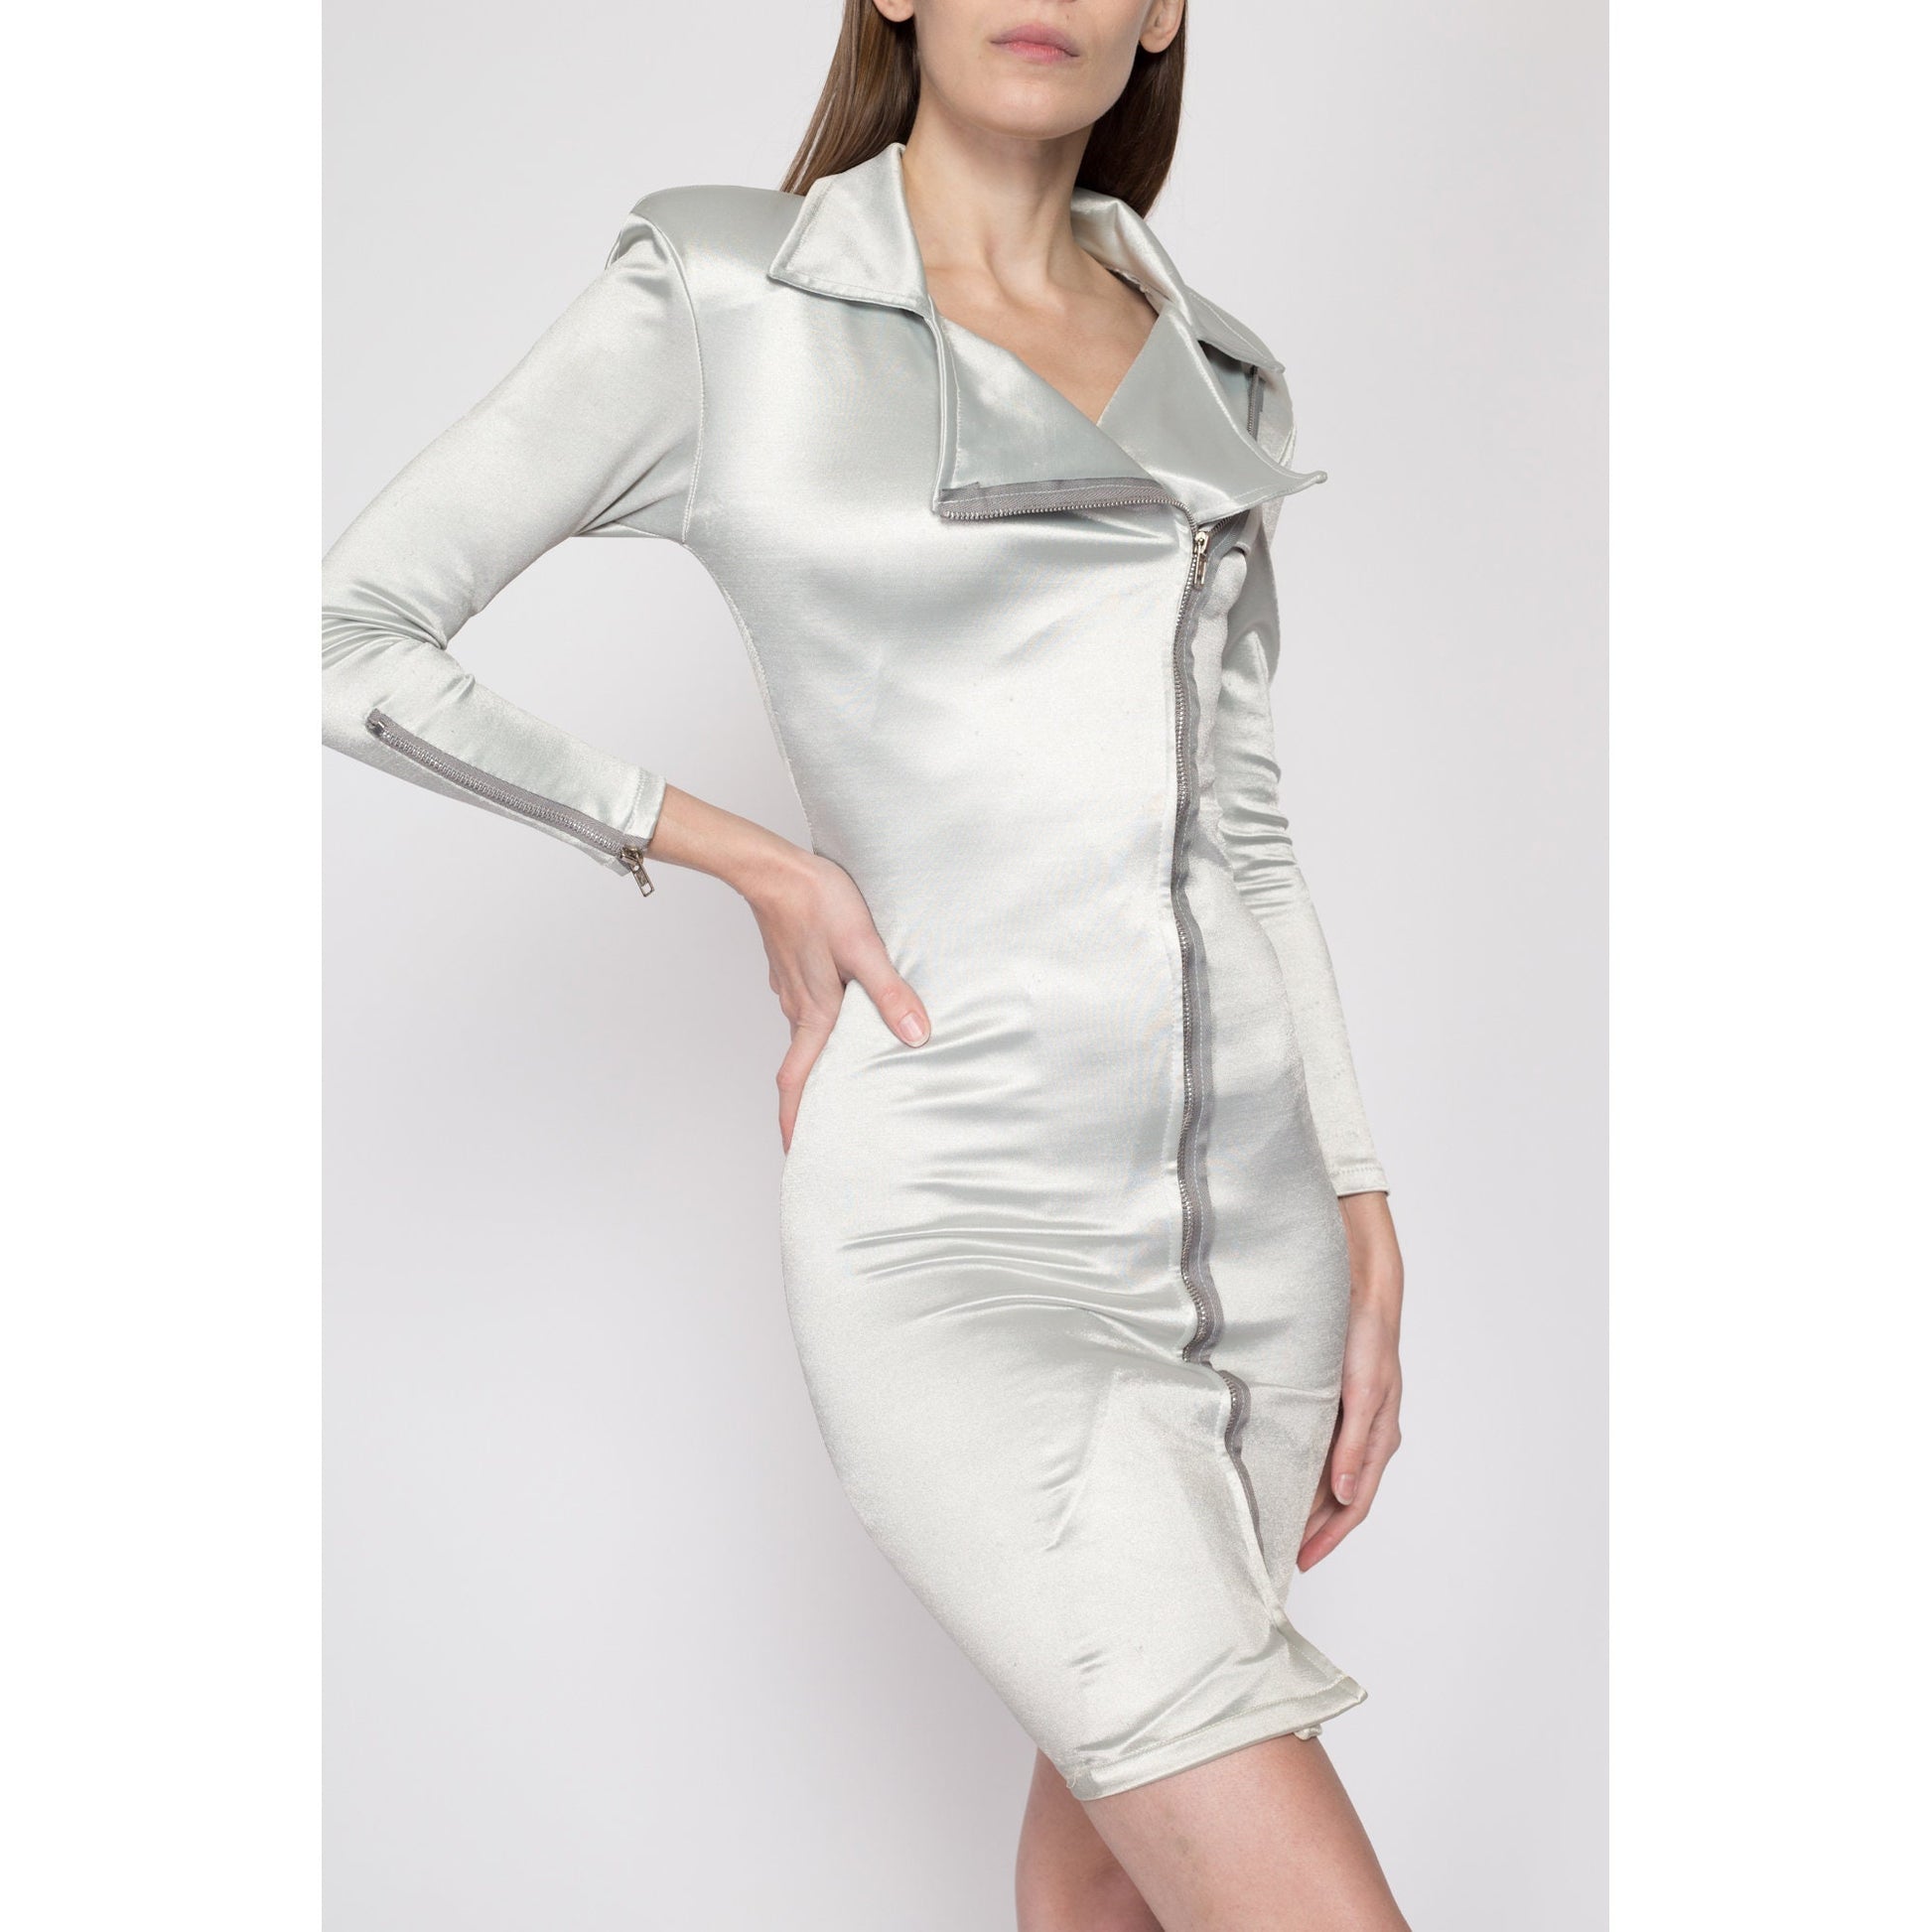 White Bodycon Dress - Long Sleeve Bodycon Dress - White Collared Mini Dress